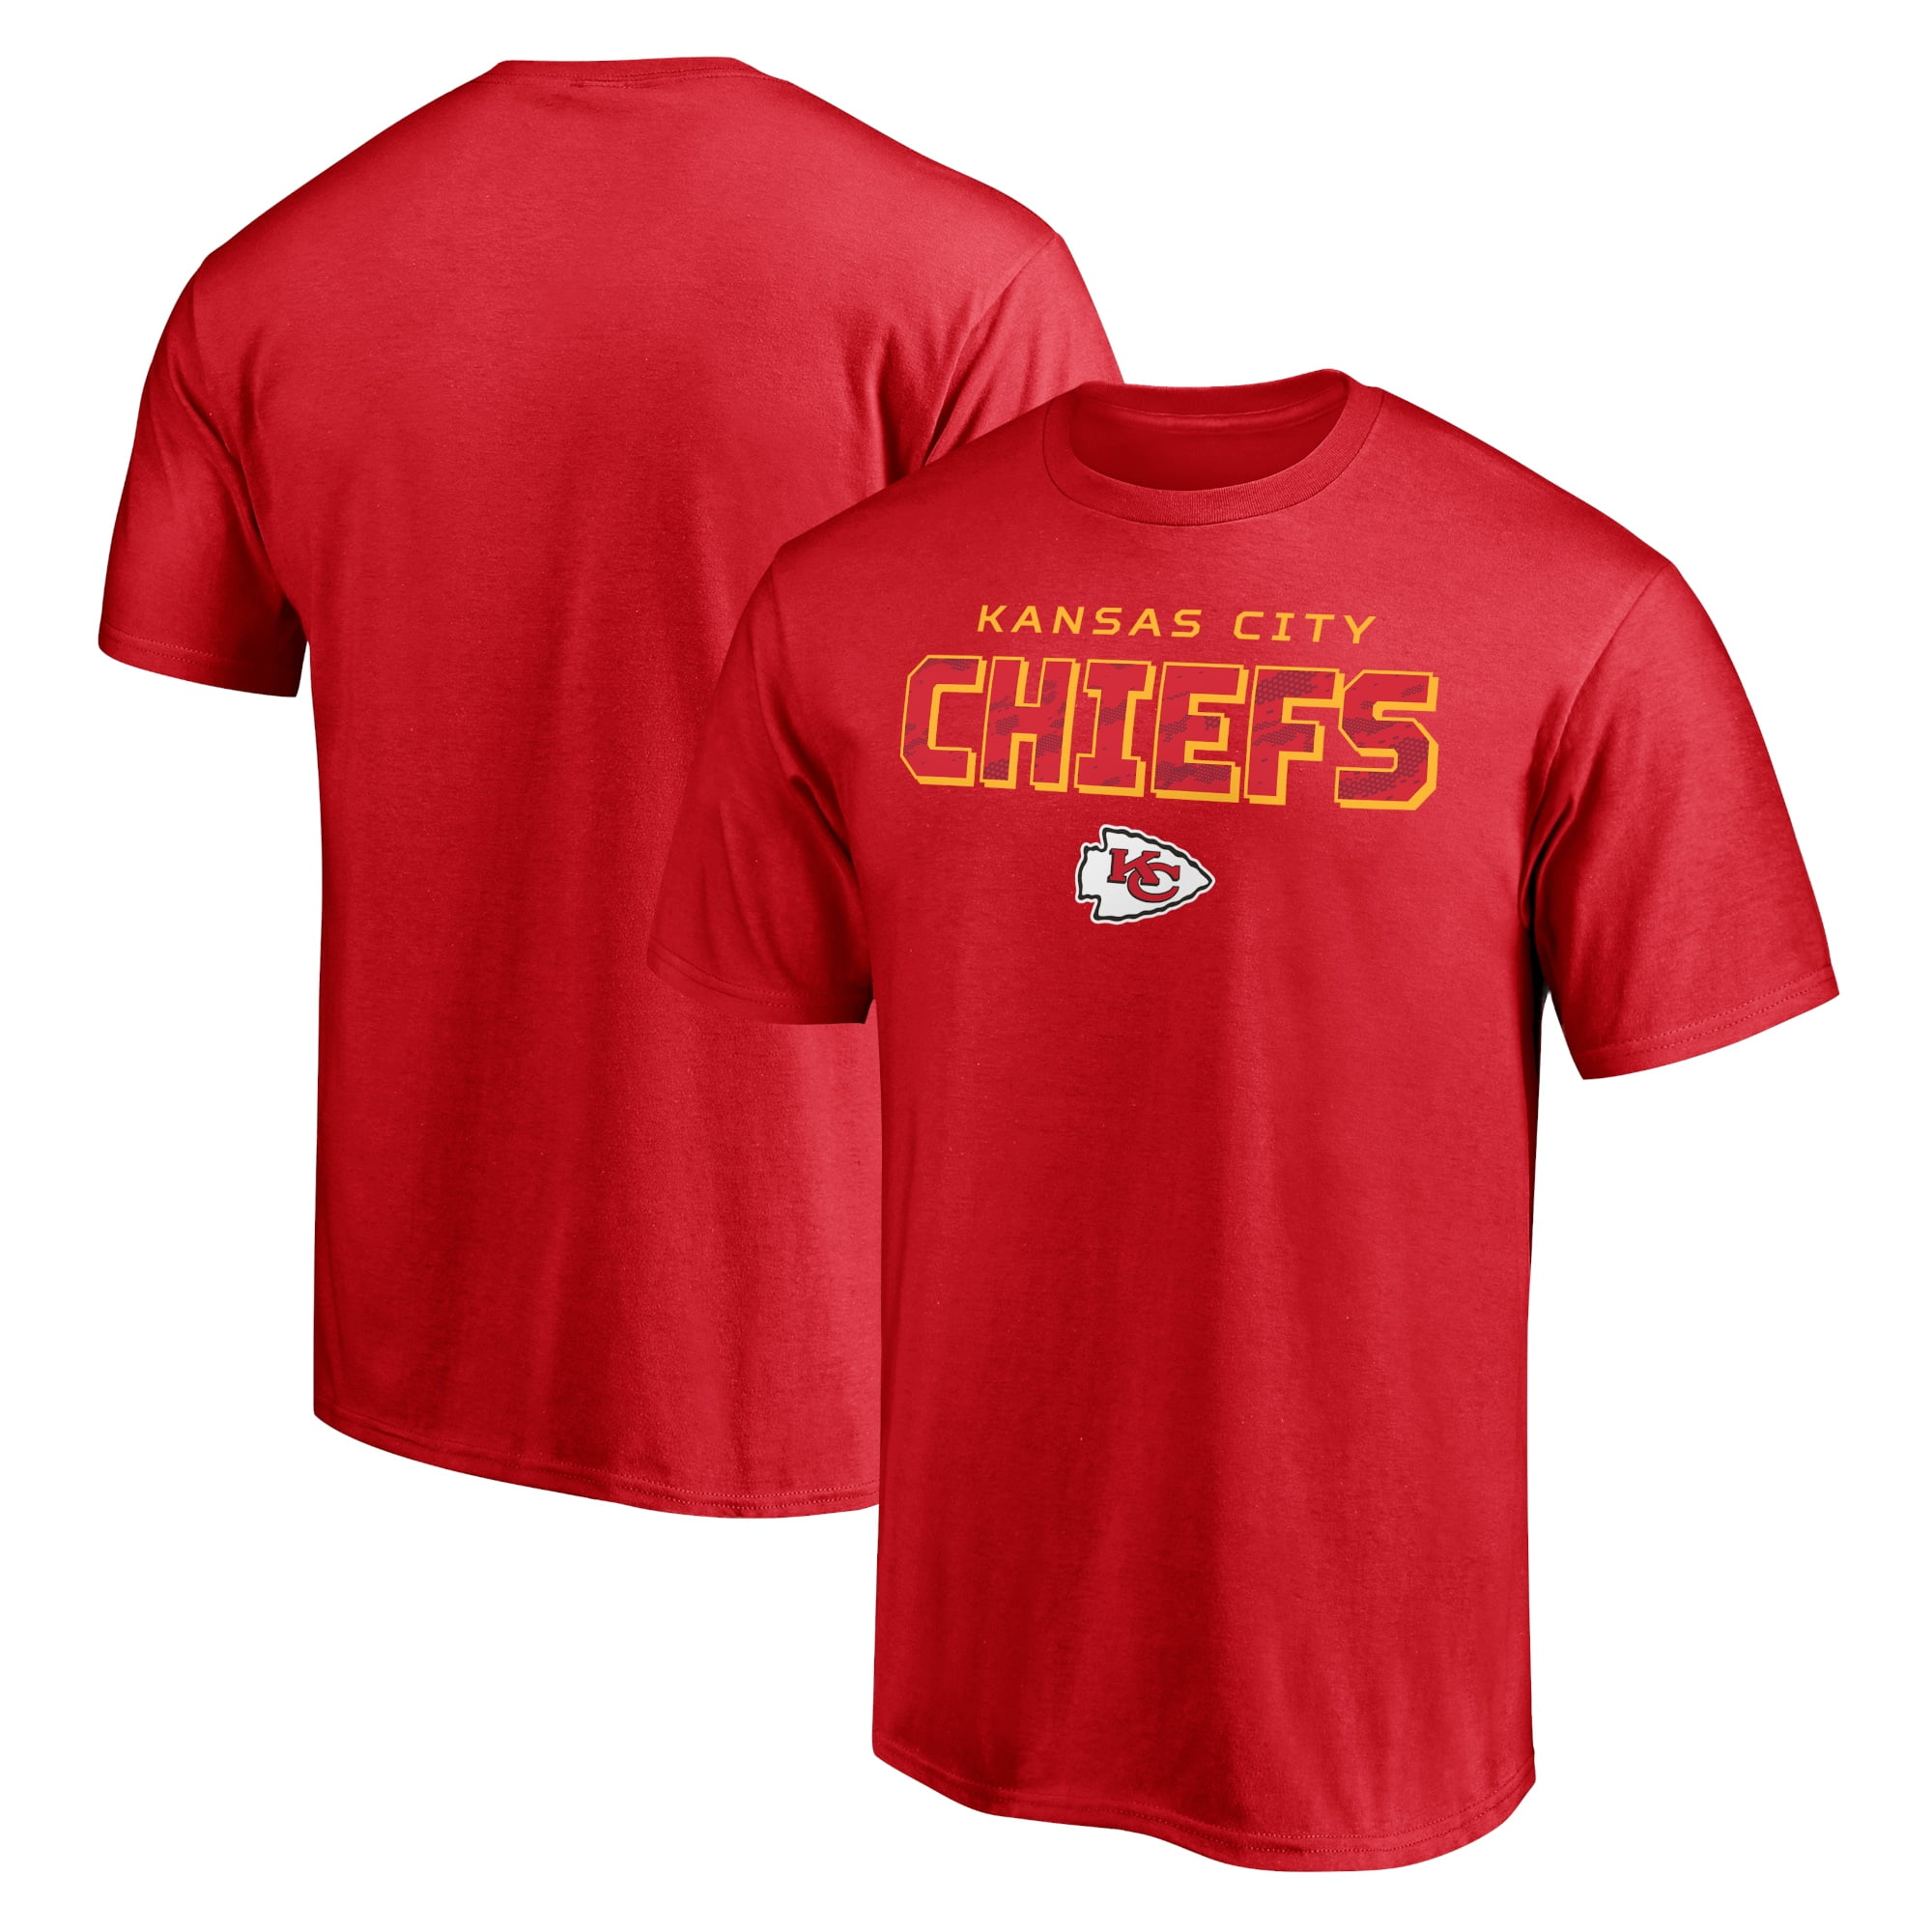 Kansas City Chiefs T-Shirts - Walmart.com